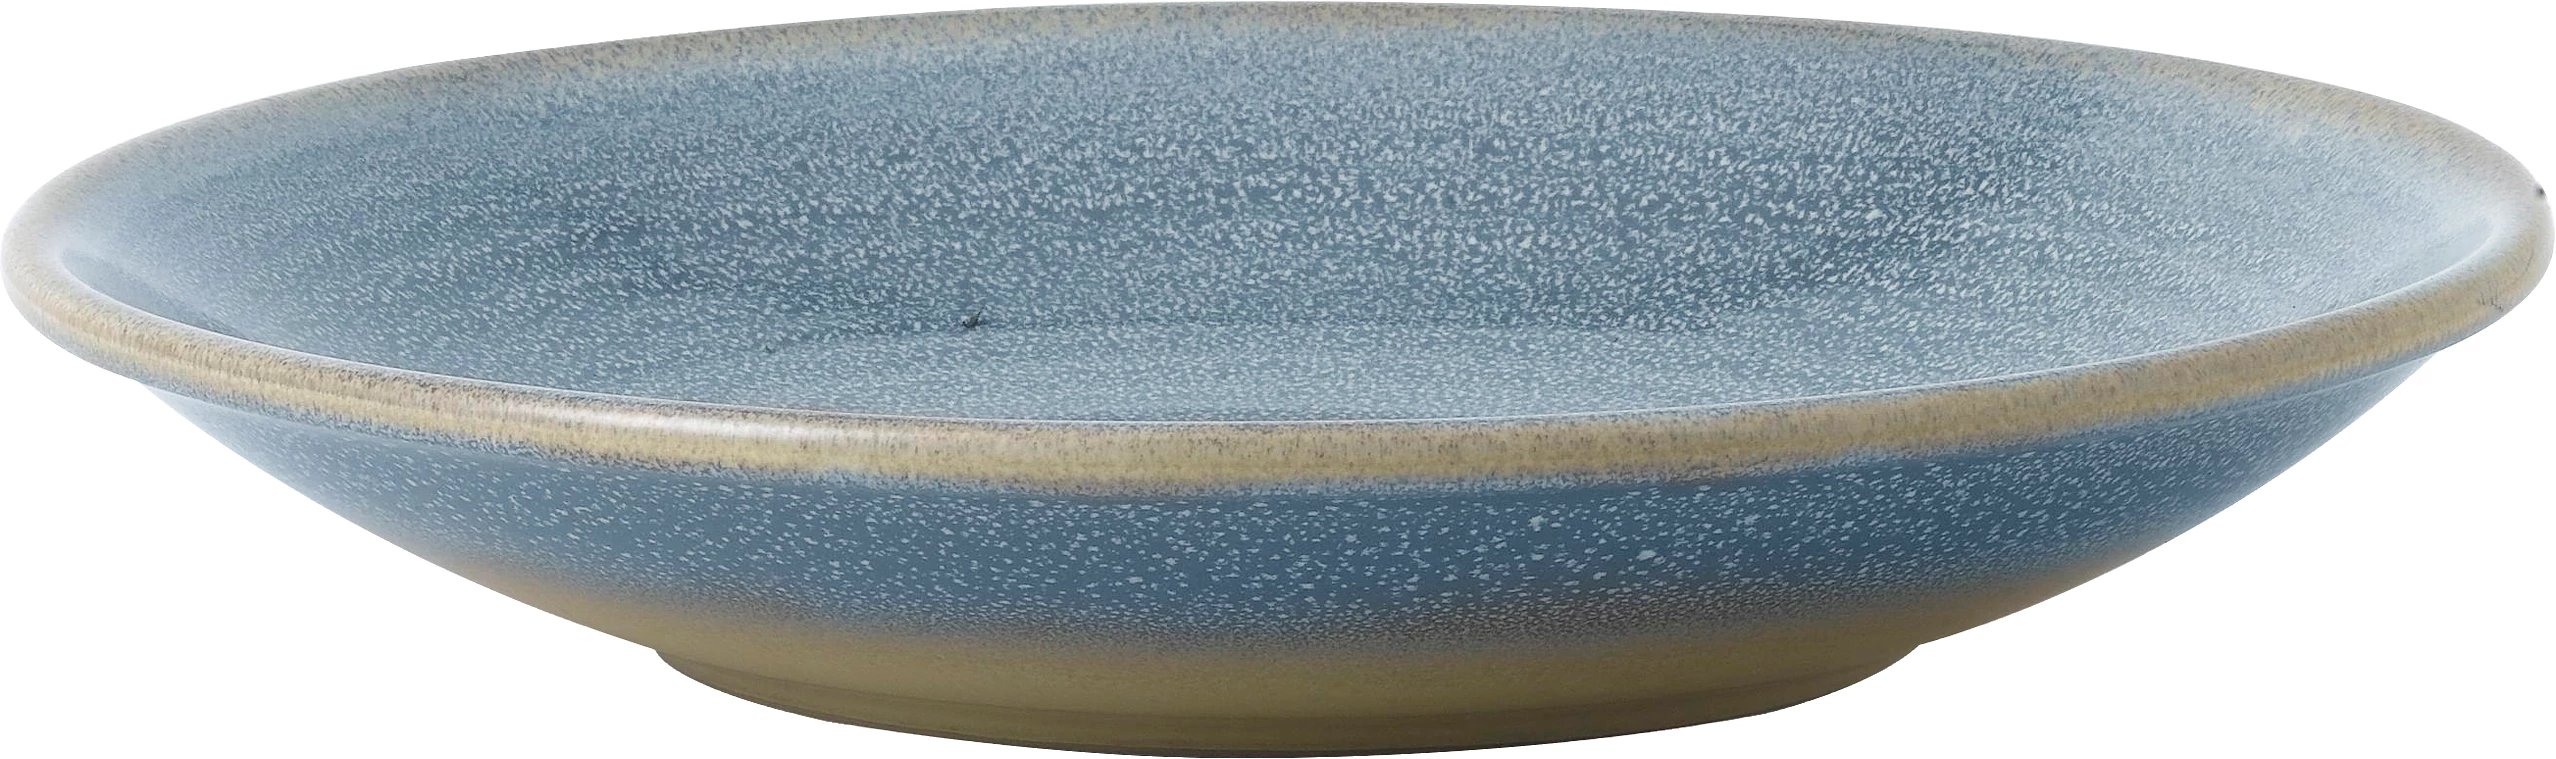 Dudson Evo Azure skål, blå, 50 cl, ø24,3 cm